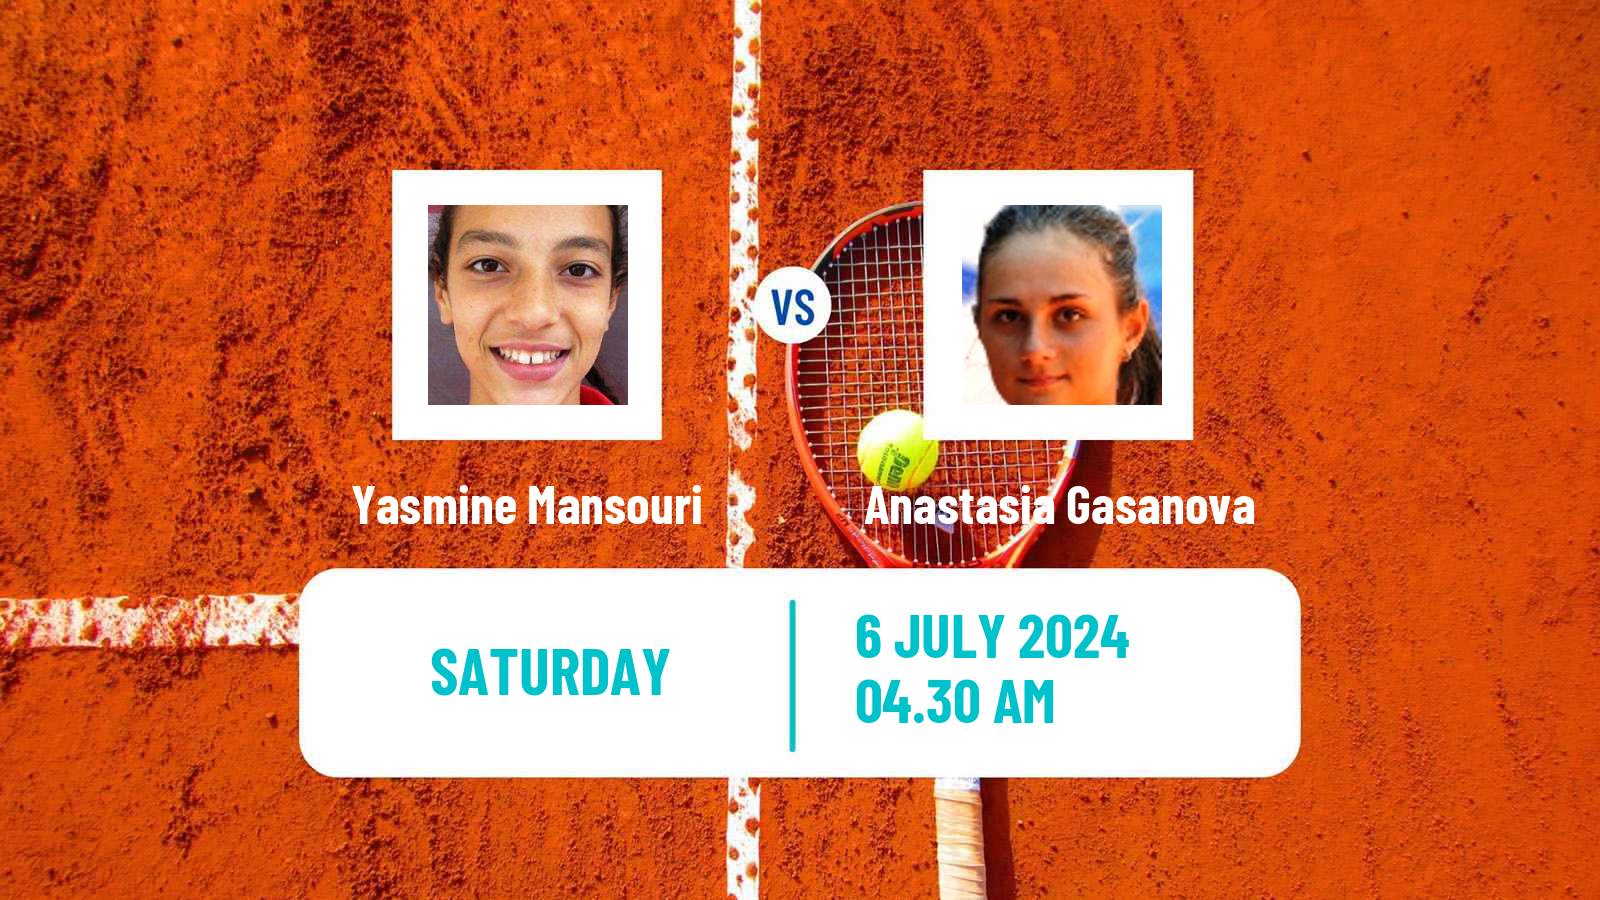 Tennis ITF W15 Monastir 25 Women Yasmine Mansouri - Anastasia Gasanova